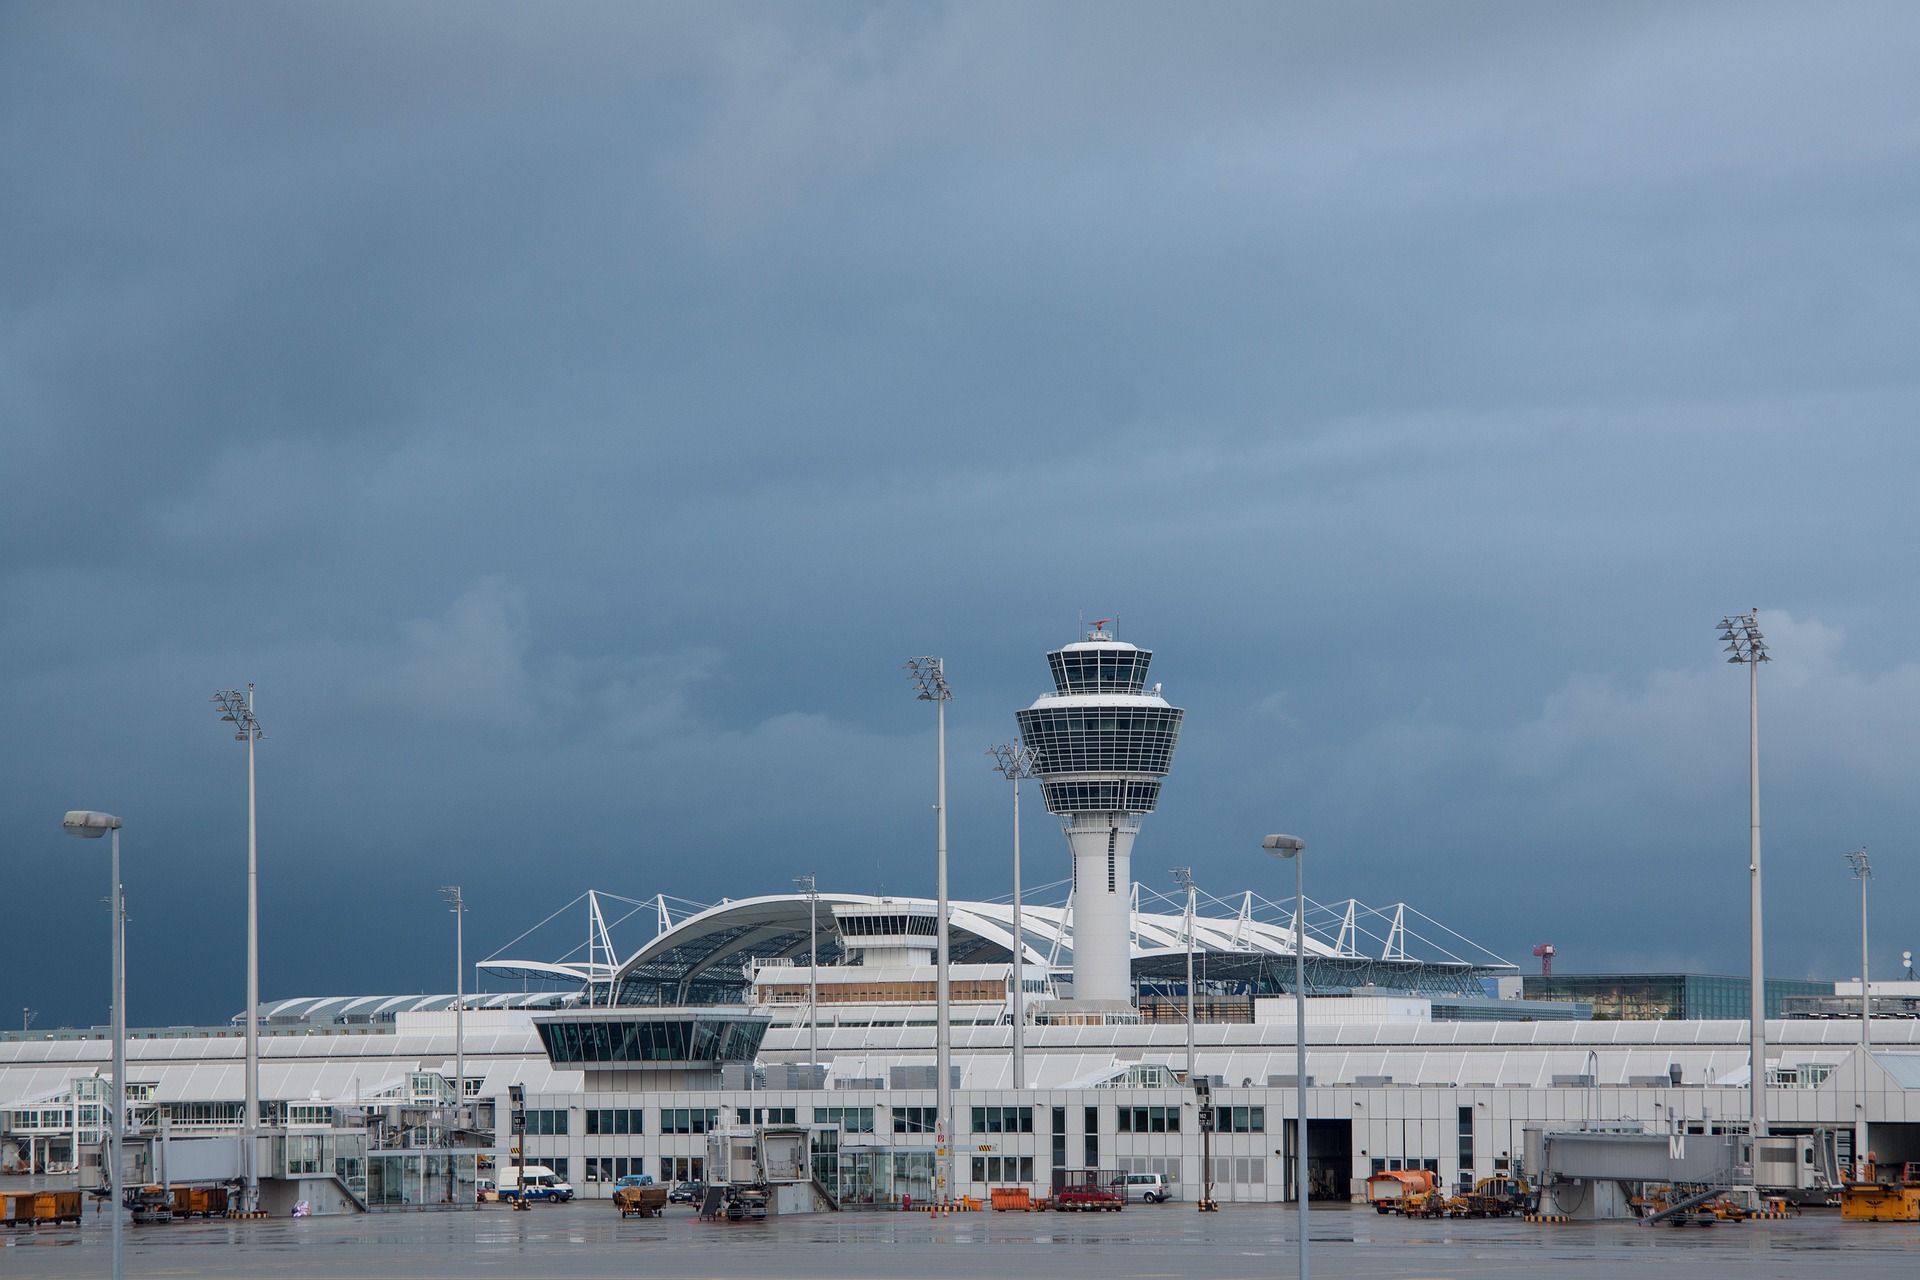 An Air traffic controller tower at an airport.